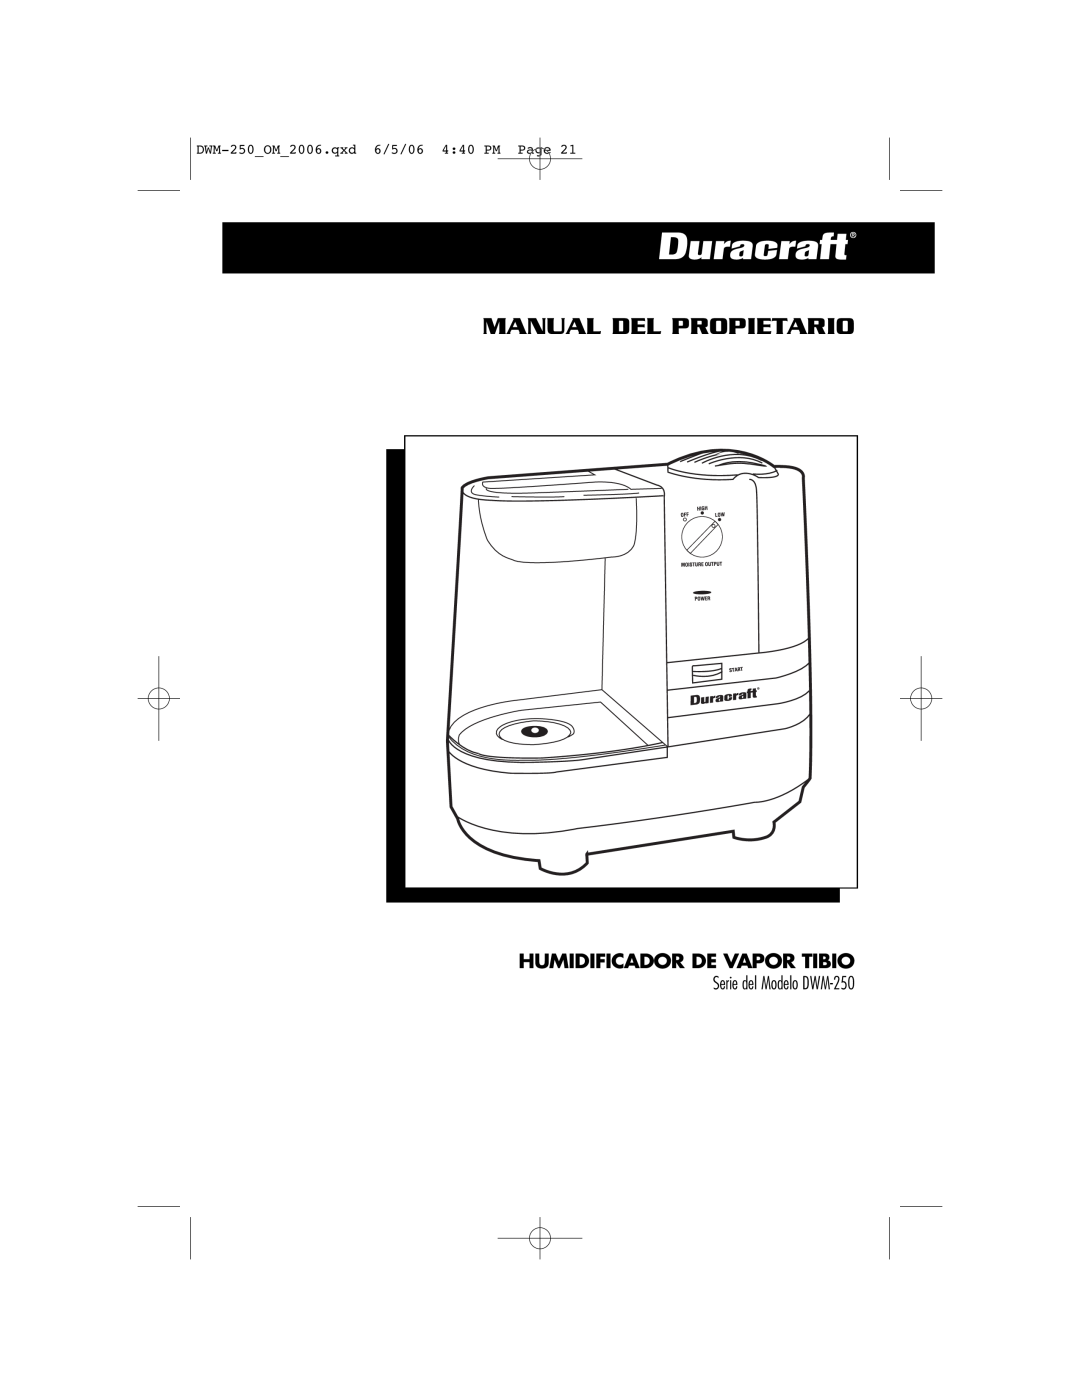 Duracraft owner manual Manual Del Propietario, Humidificador De Vapor Tibio, DWM-250OM2006.qxd 6/5/06 440 PM Page 